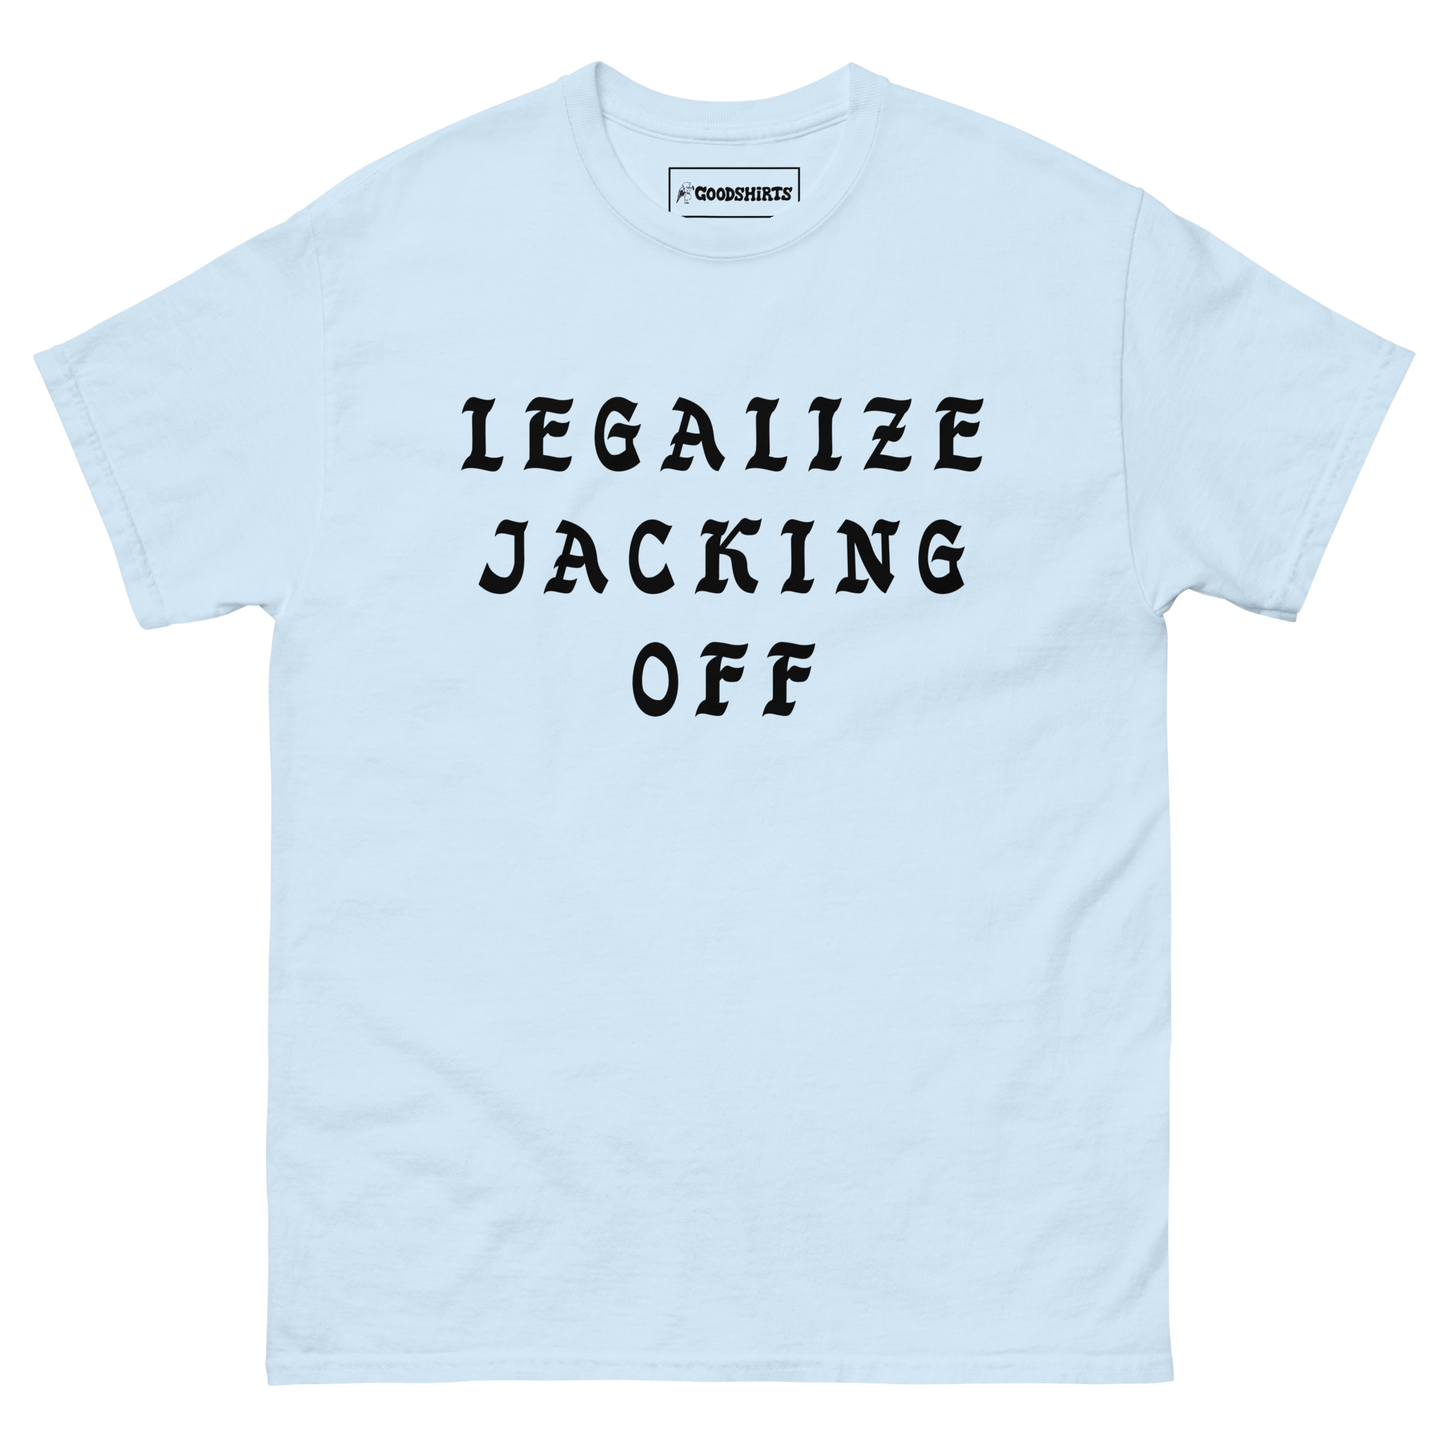 Legalize Jacking Off.